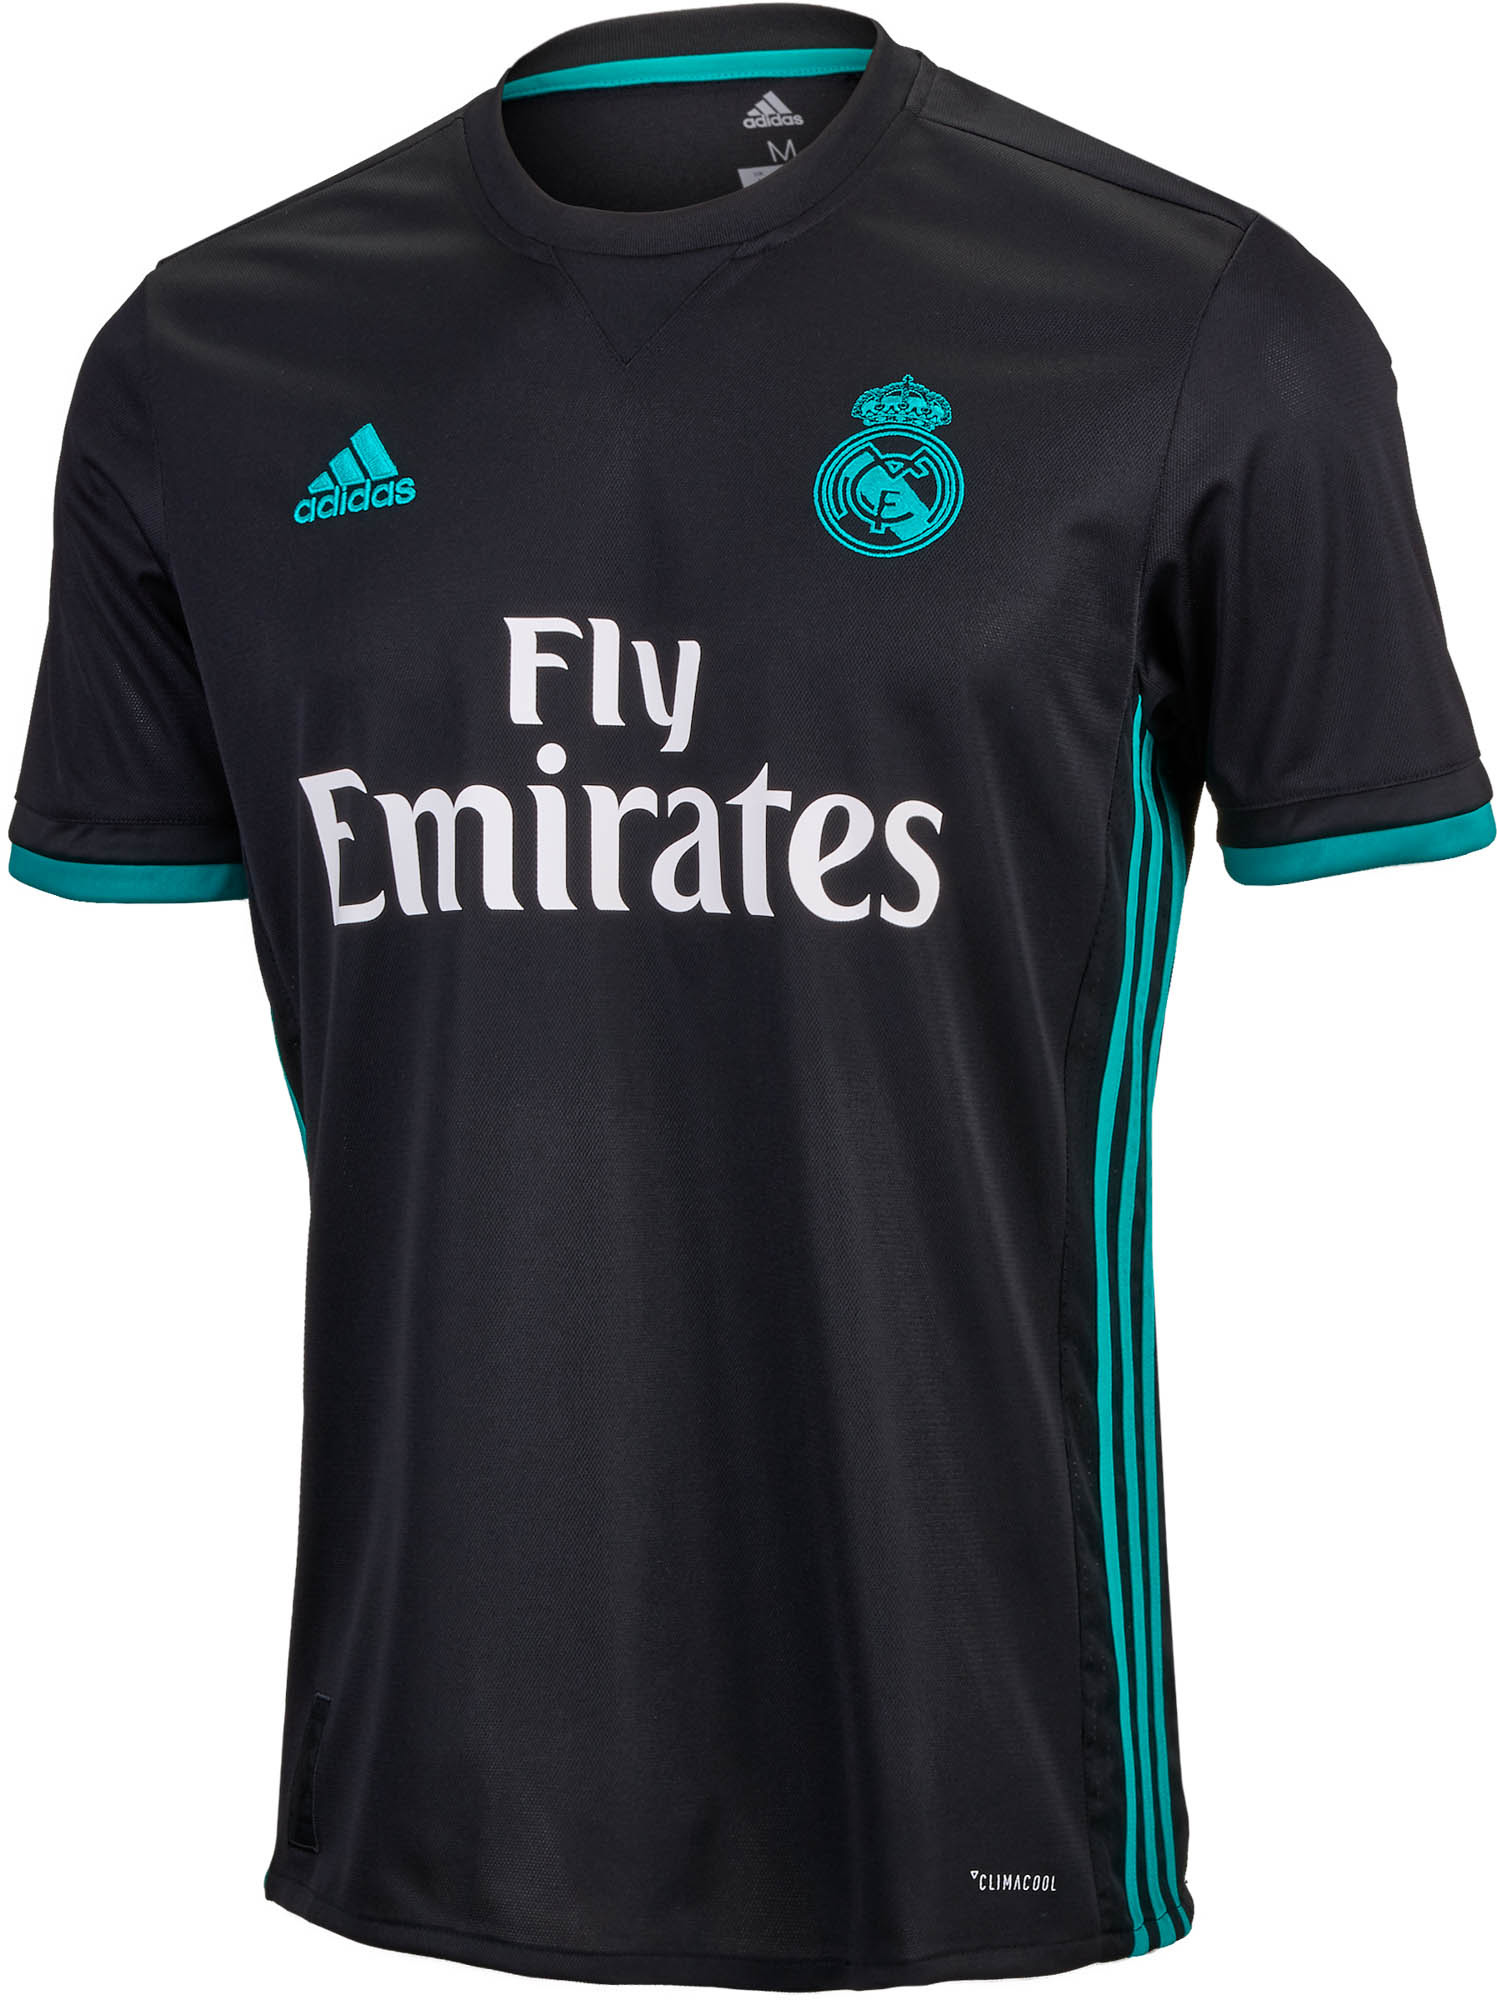 adidas Real Madrid Away Jersey - 2017/18 Jerseys